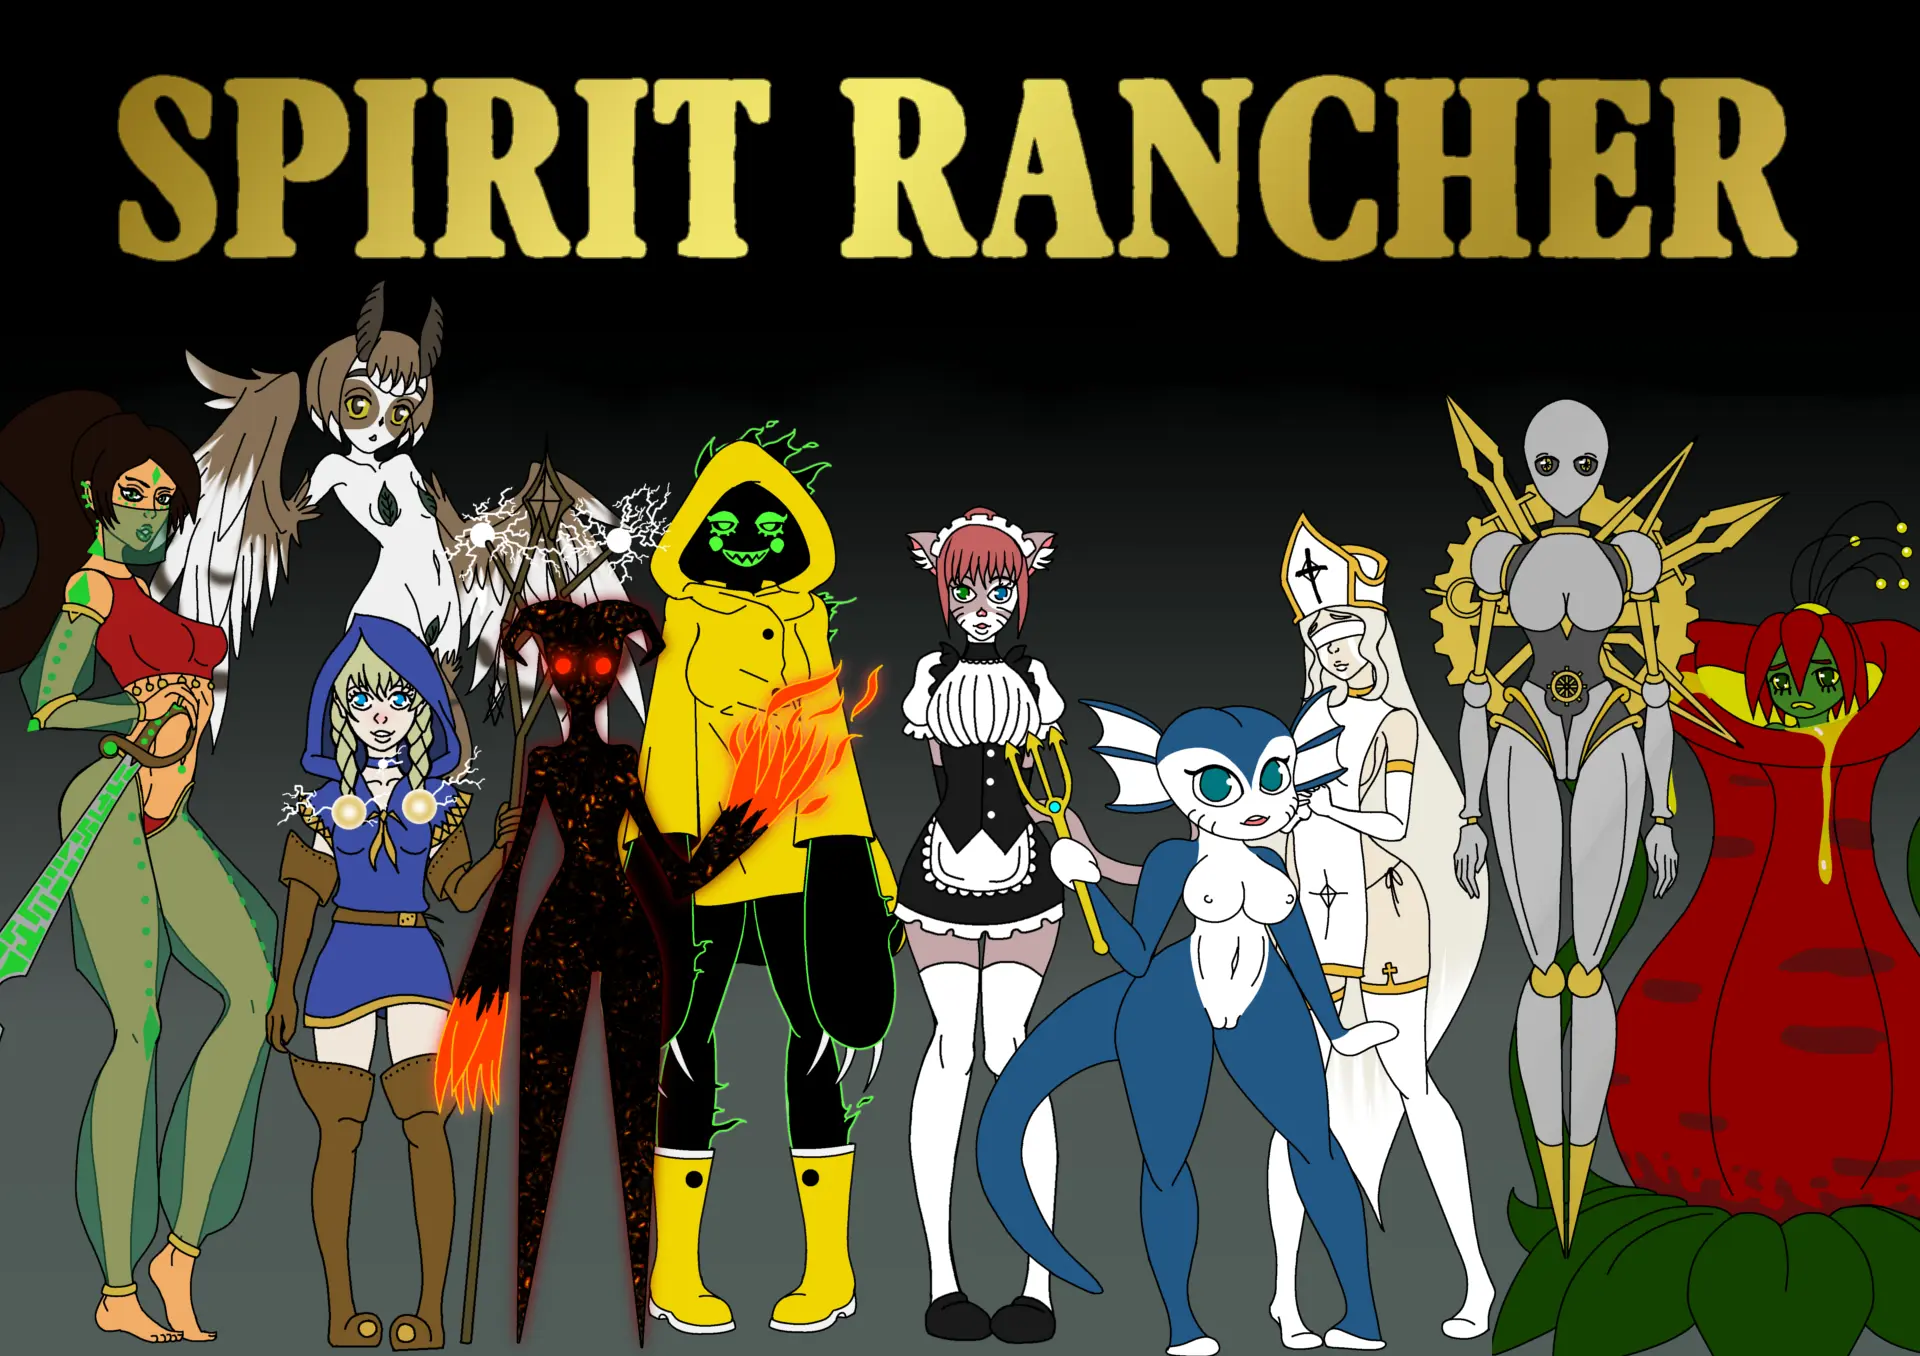 Spirit rancher [v1.0] main image